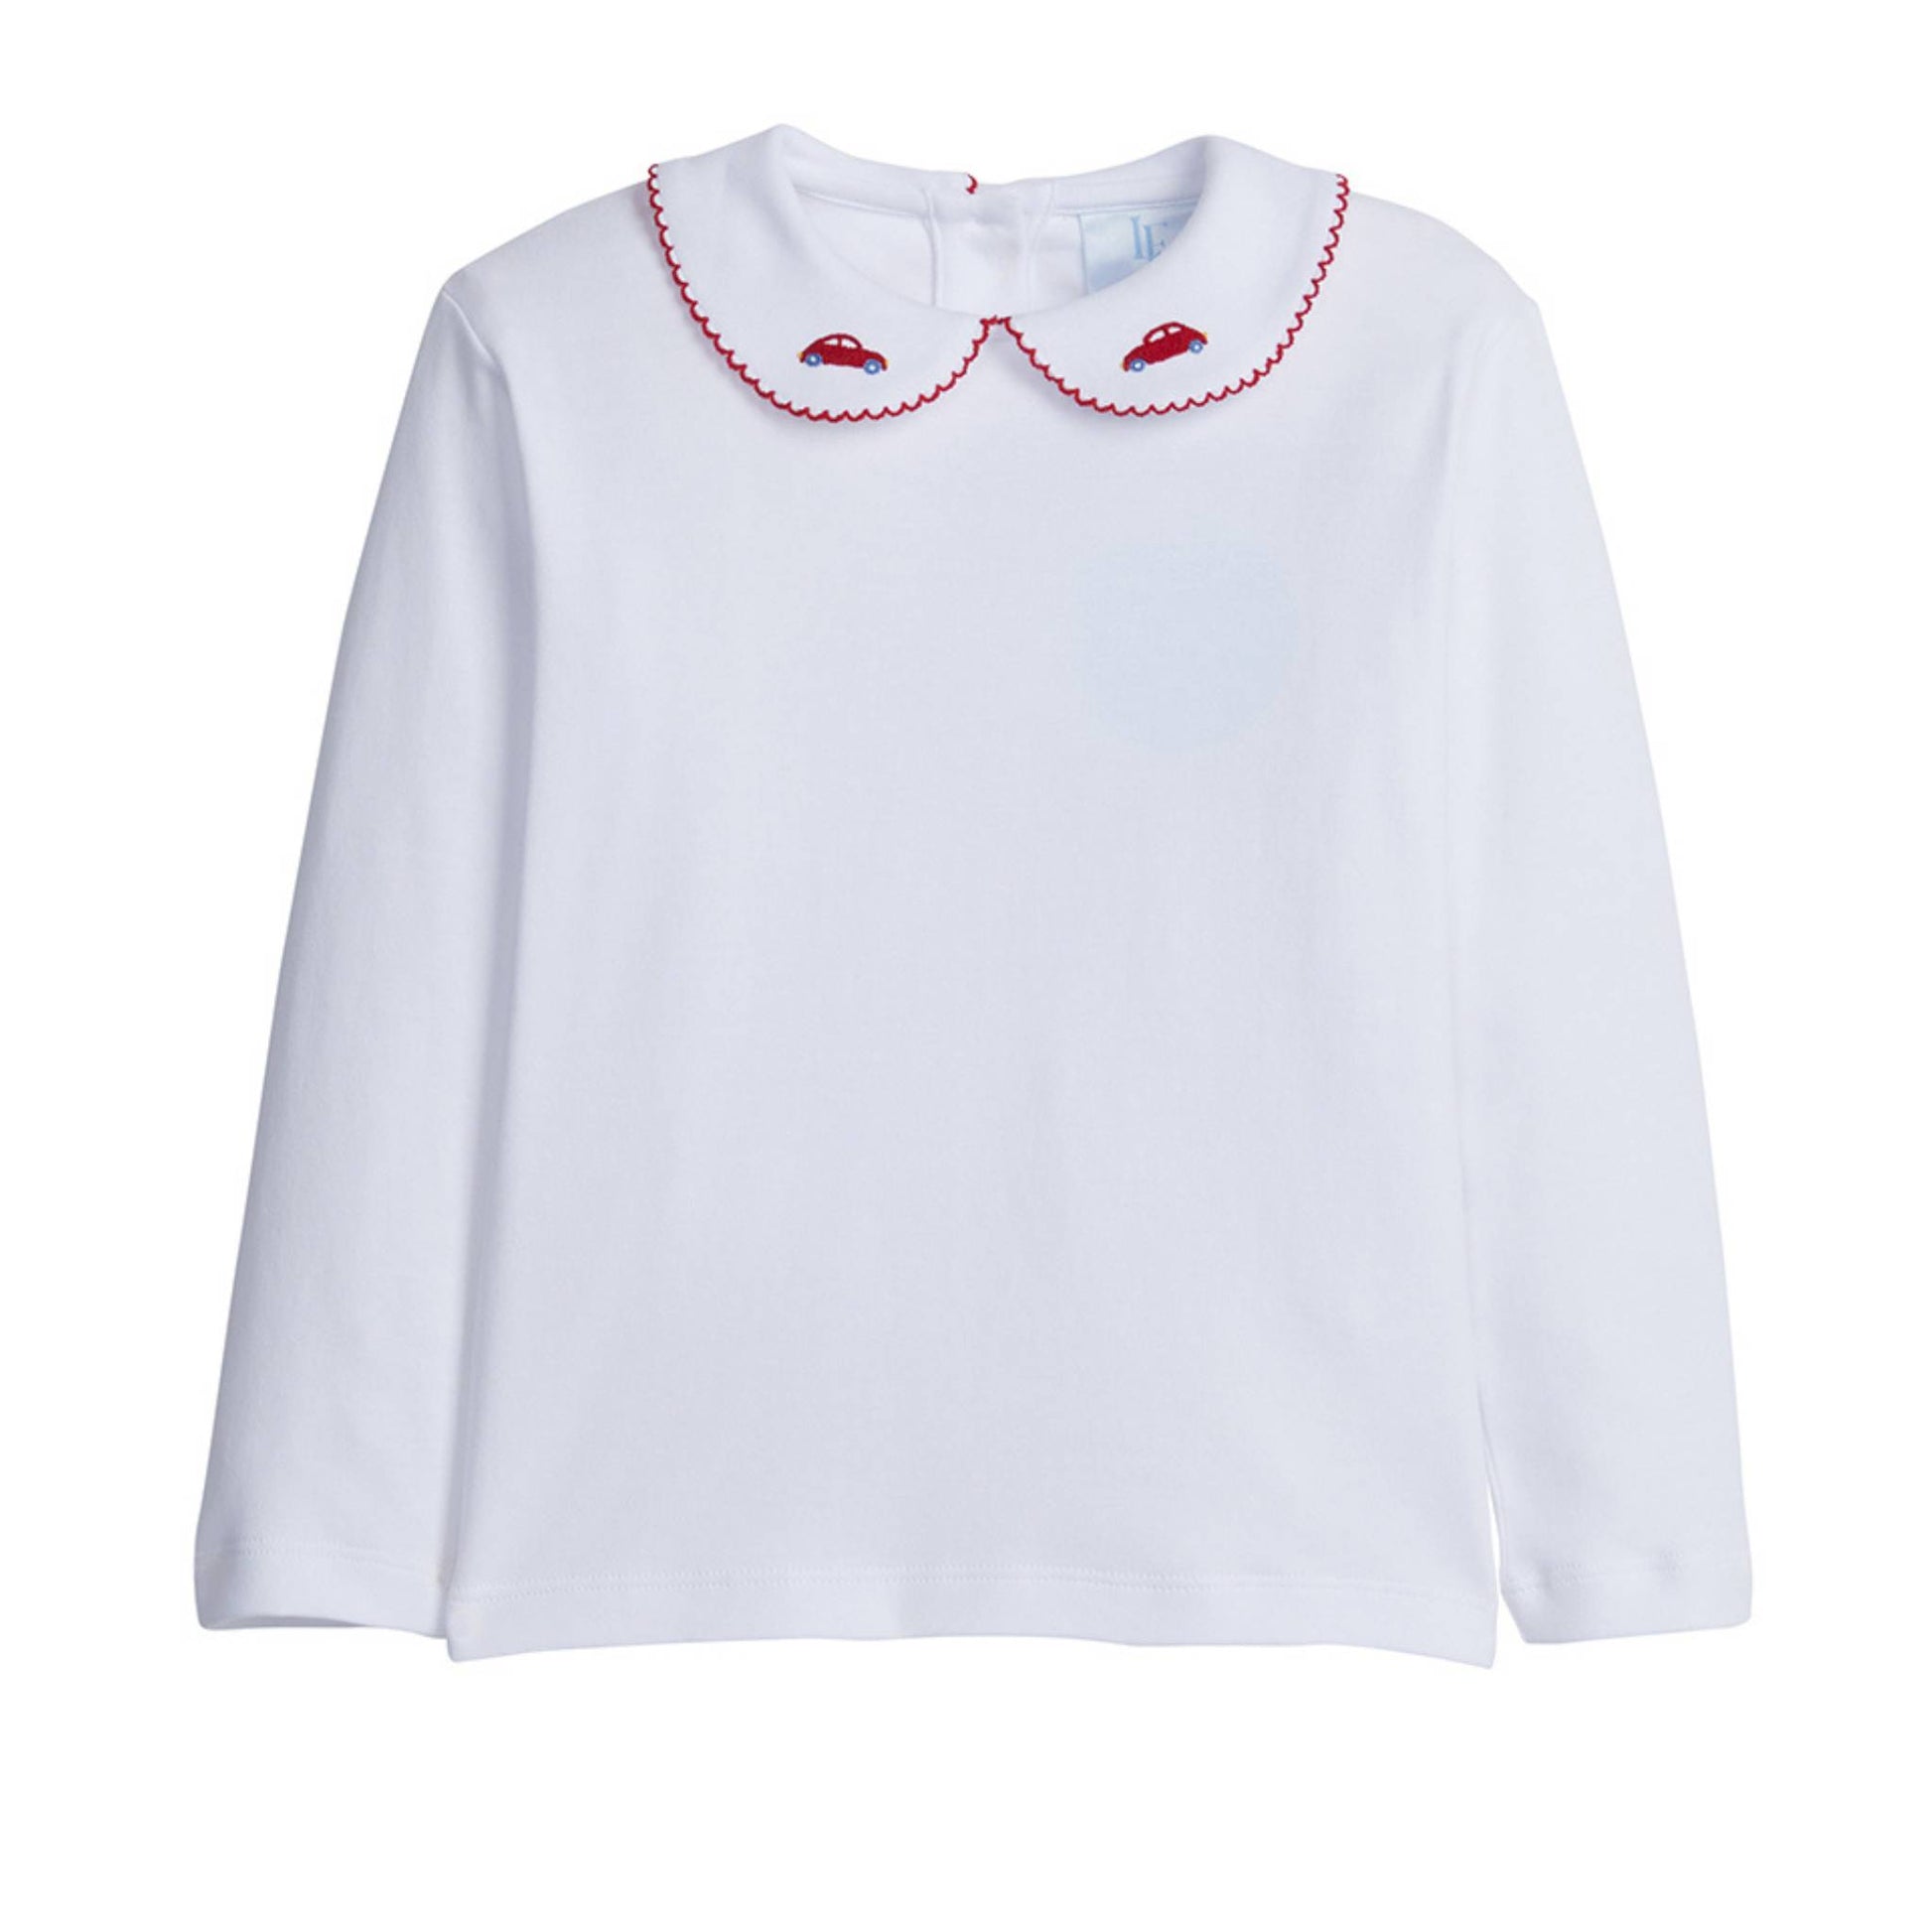 Vive La Fete White Pink Collared Under Shirt 6 Girls